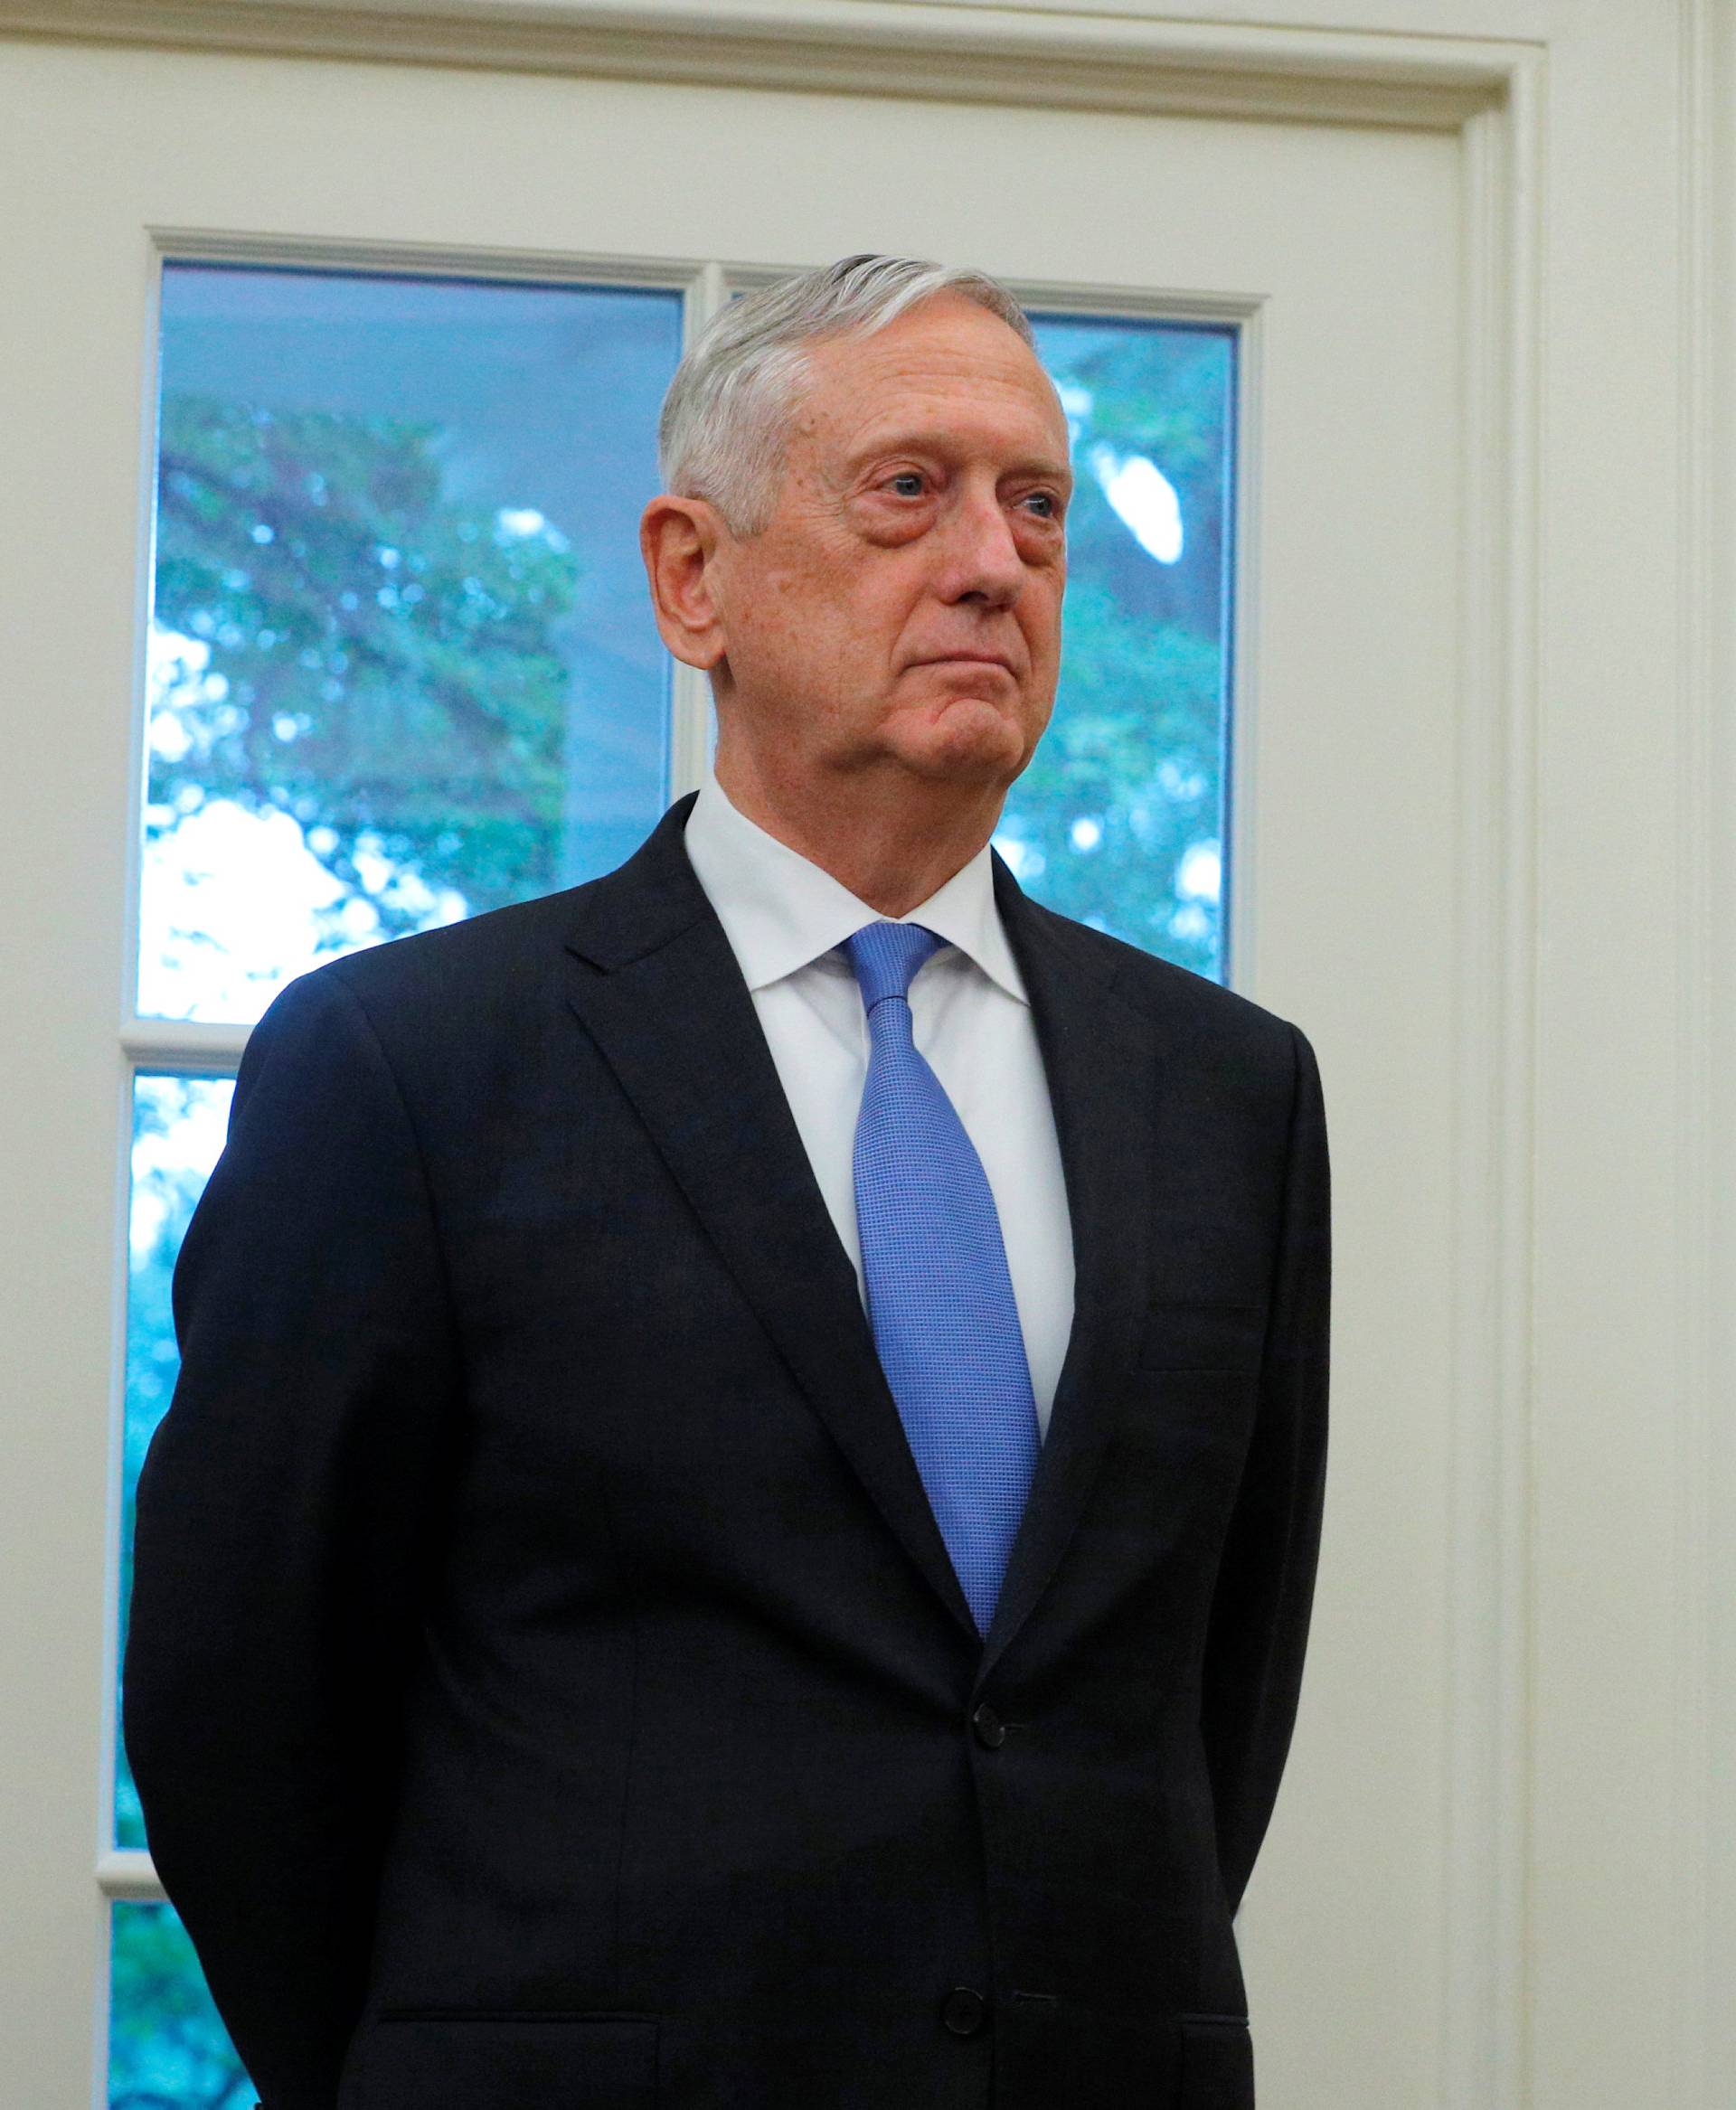 U.S. Secretary of Defense Mattis attends the swearing in ceremony for new Secretary of Veterans Affairs Robert Wilkie in Washington